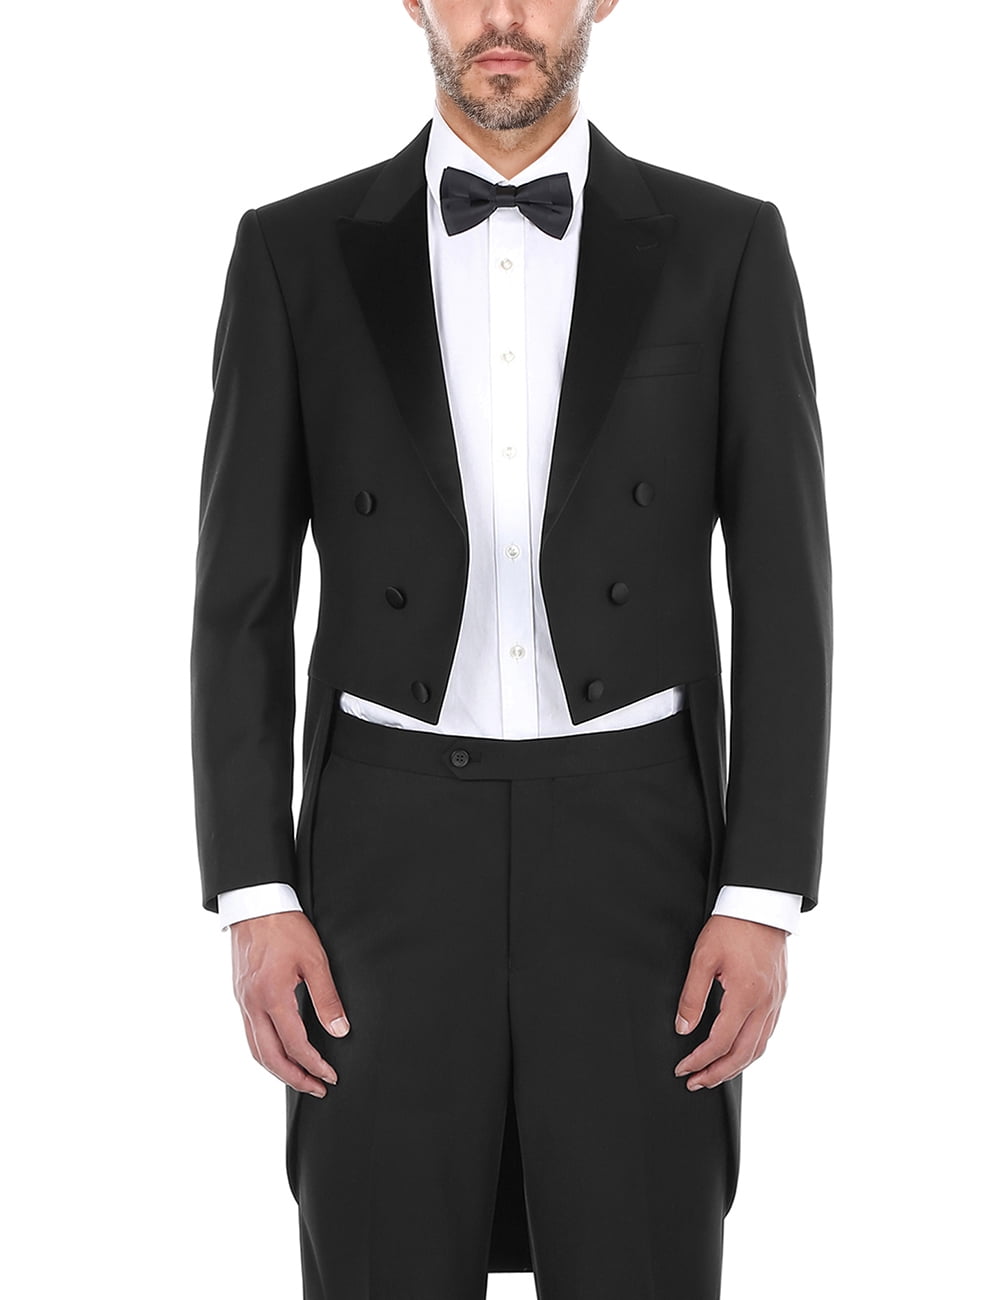 Mens Size 40 R Classic White Notch Tails Tuxedo Jacket Full Dress Tail 